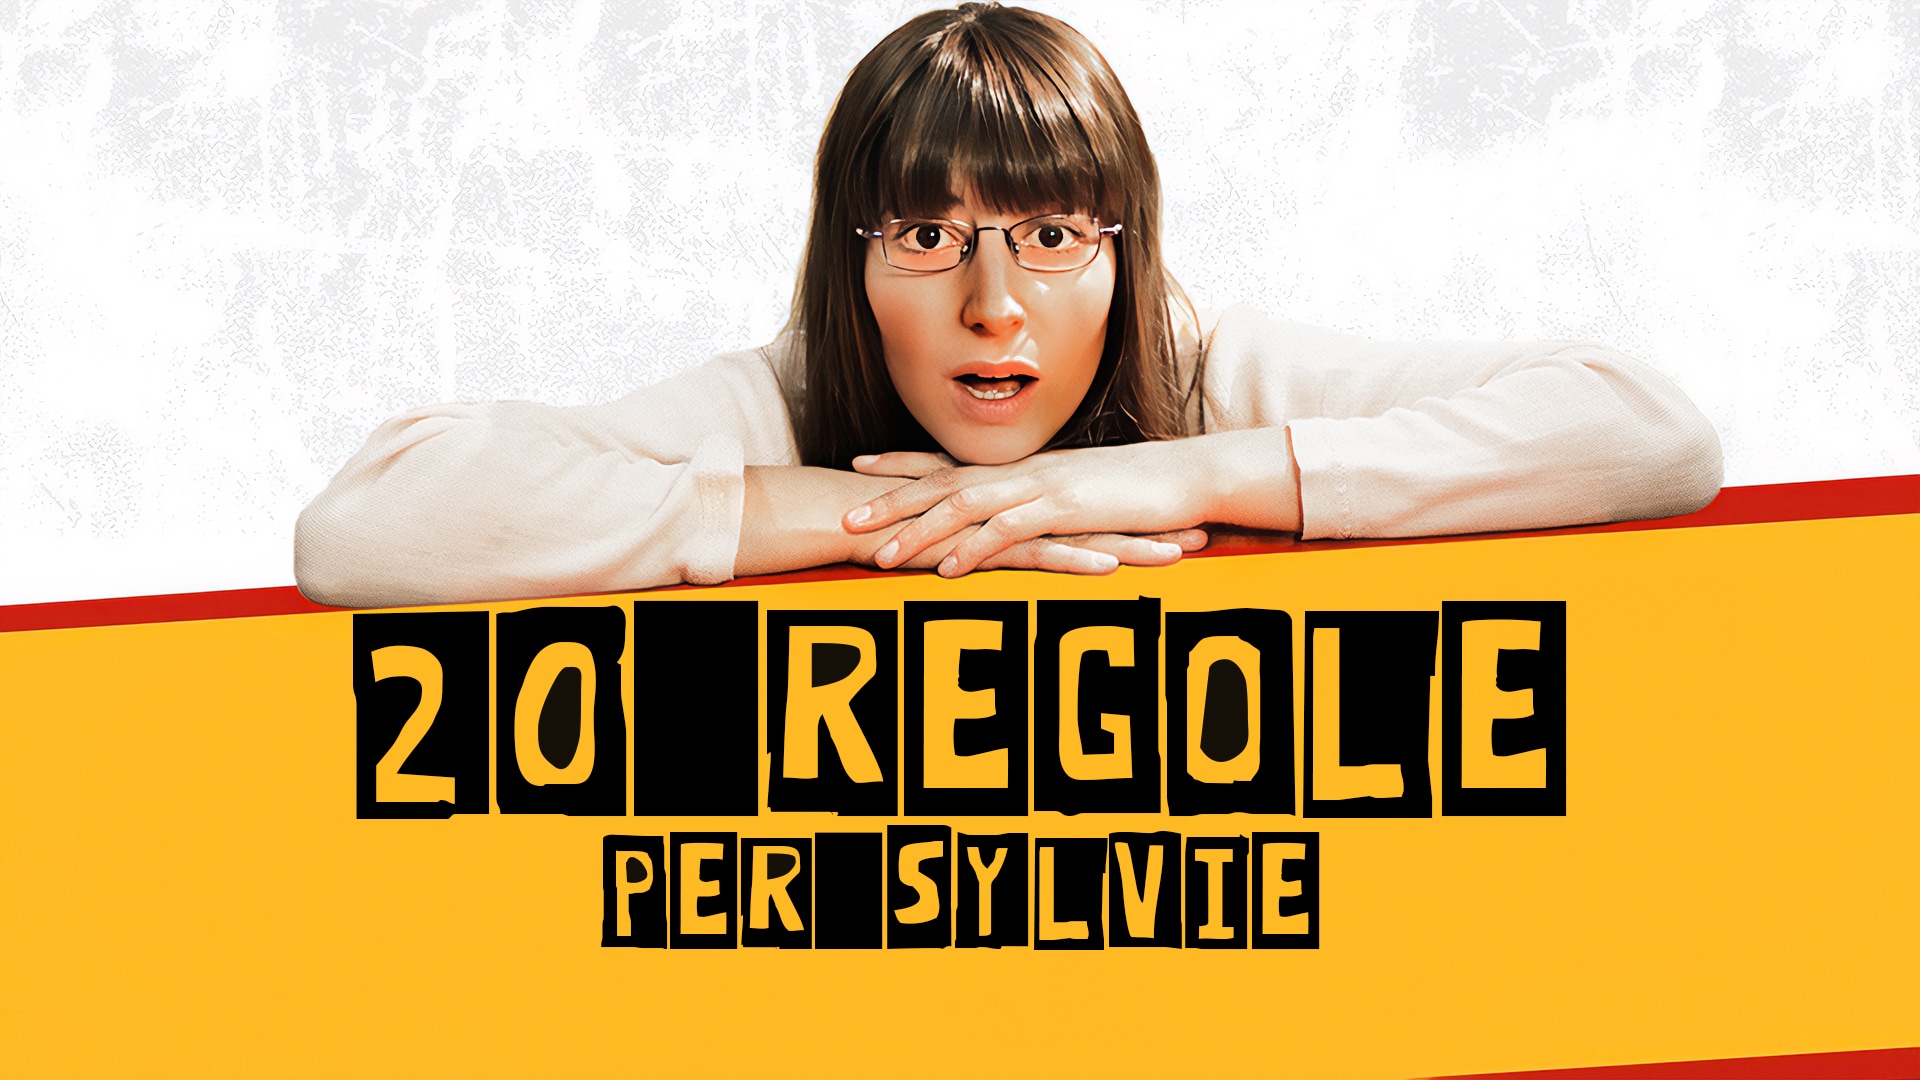 20 regole per Sylvie